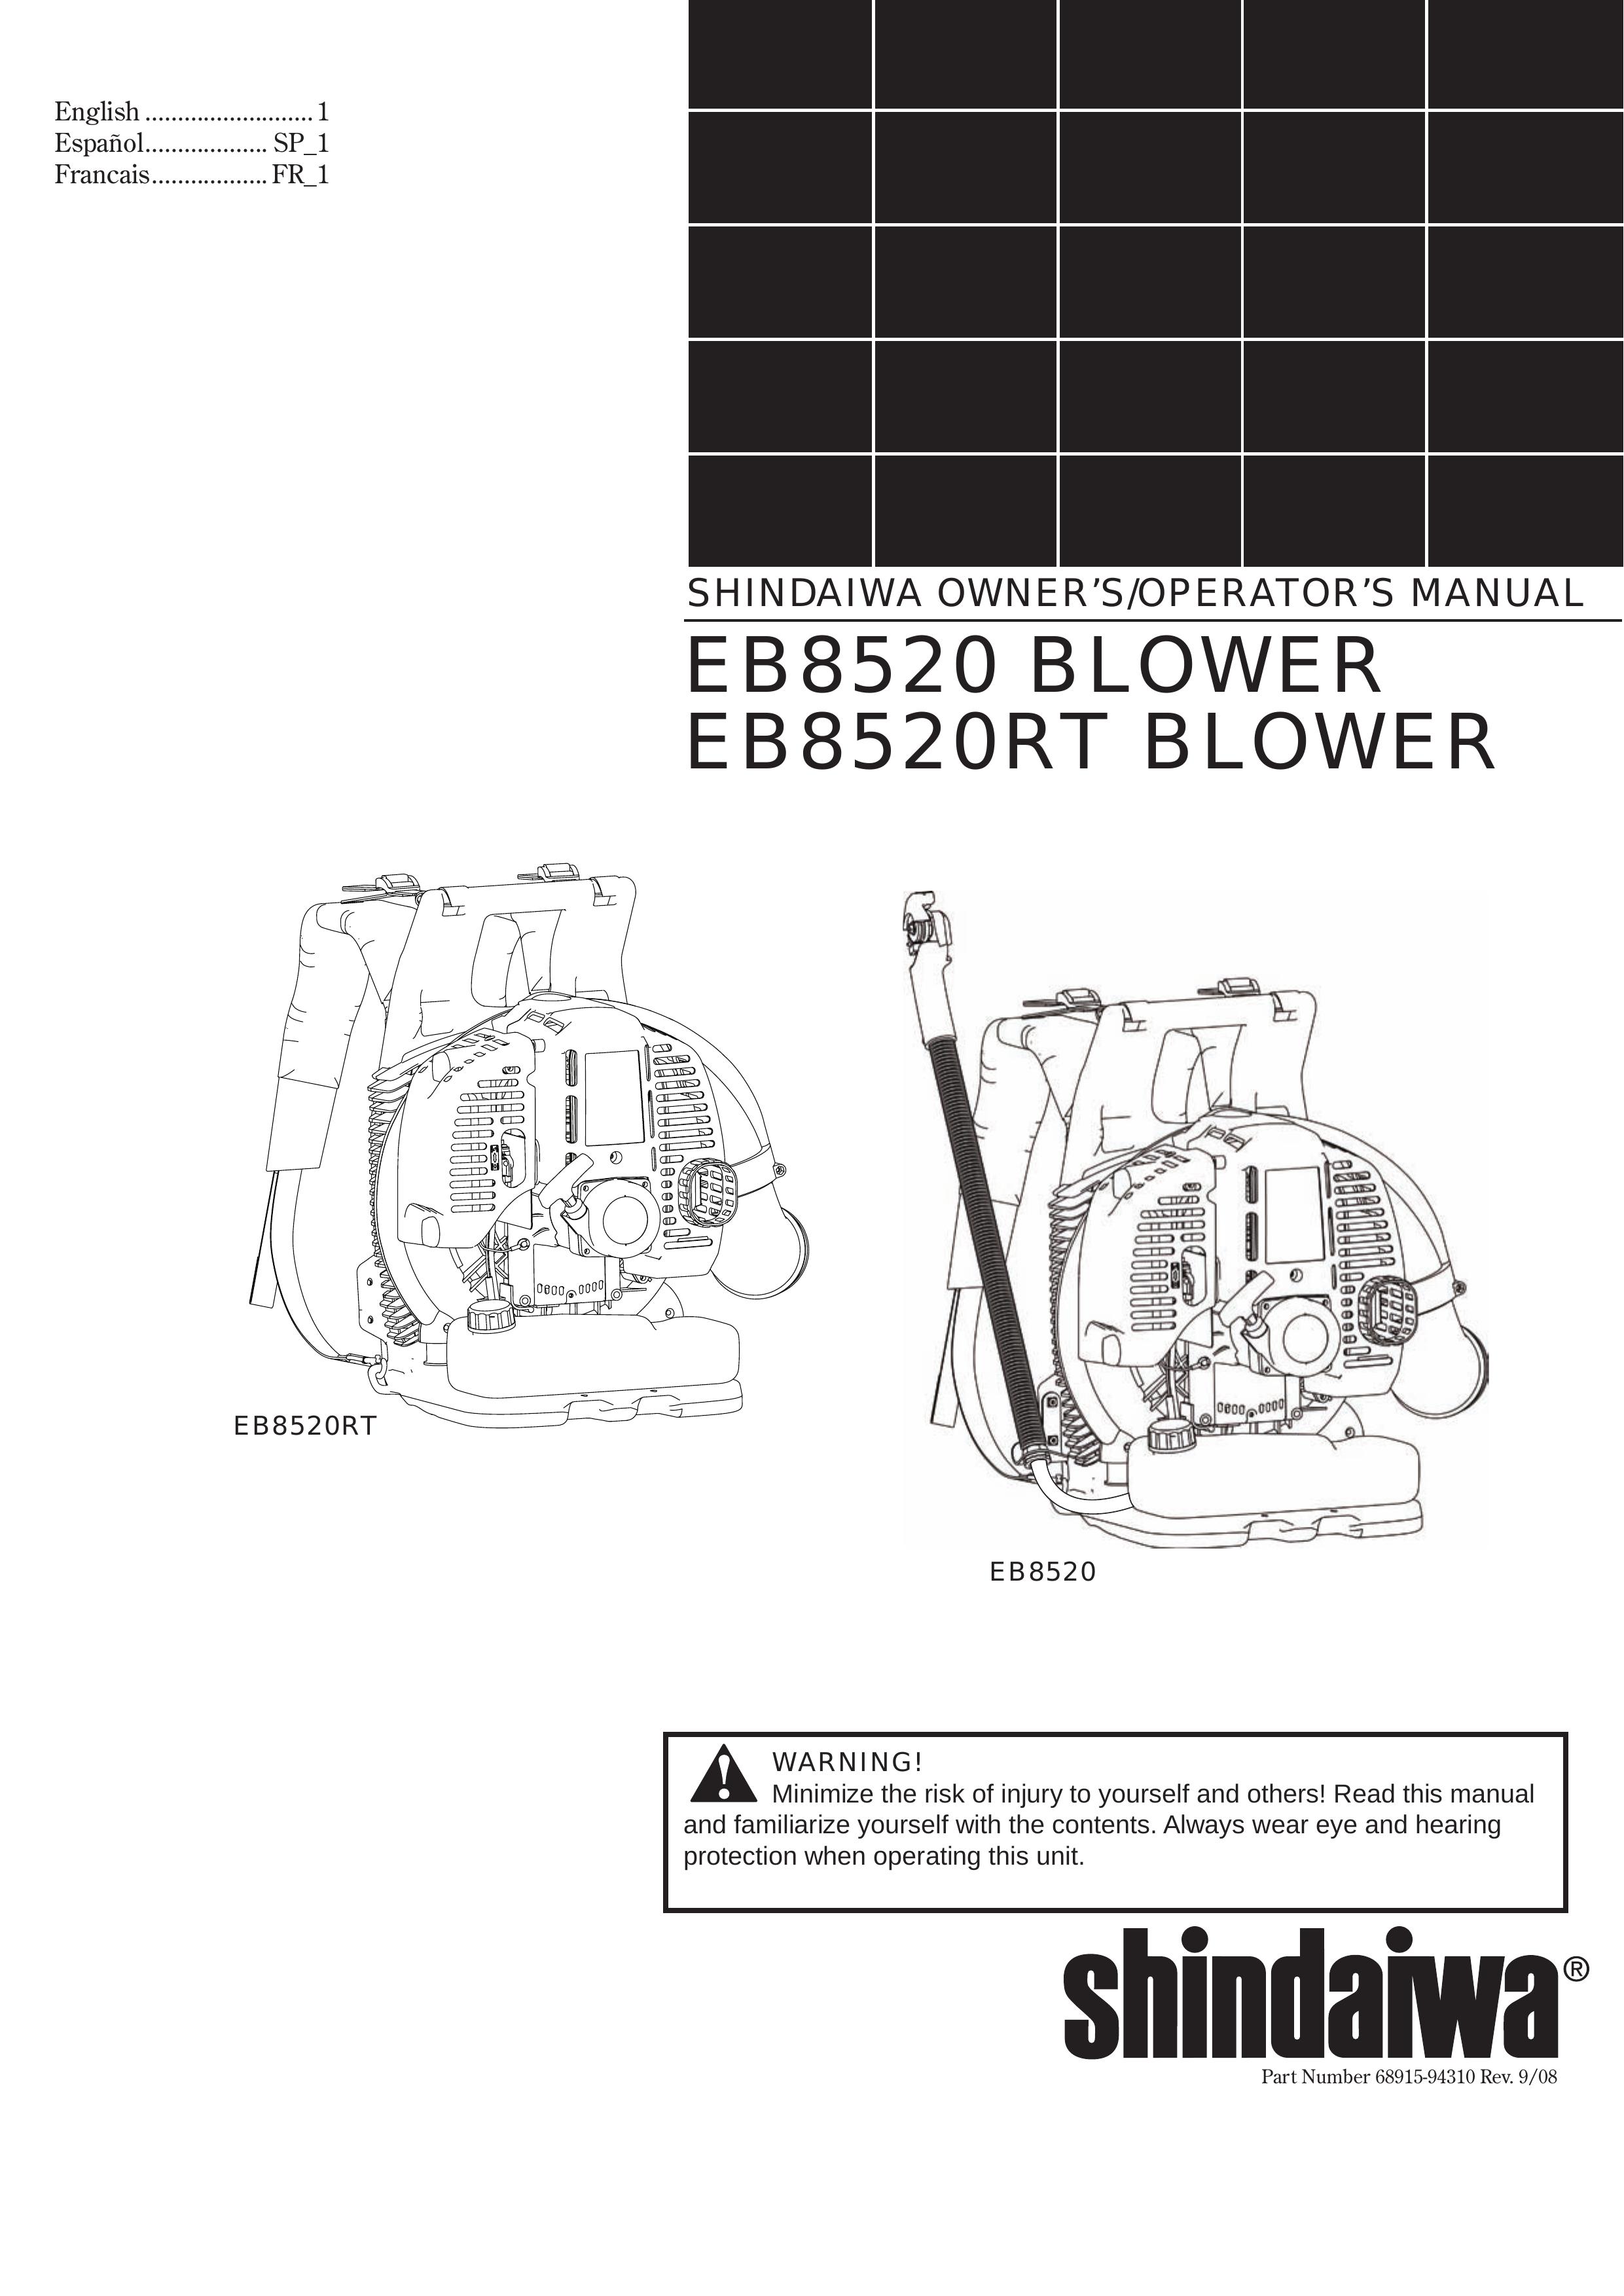 Shindaiwa EB8520 Blower User Manual